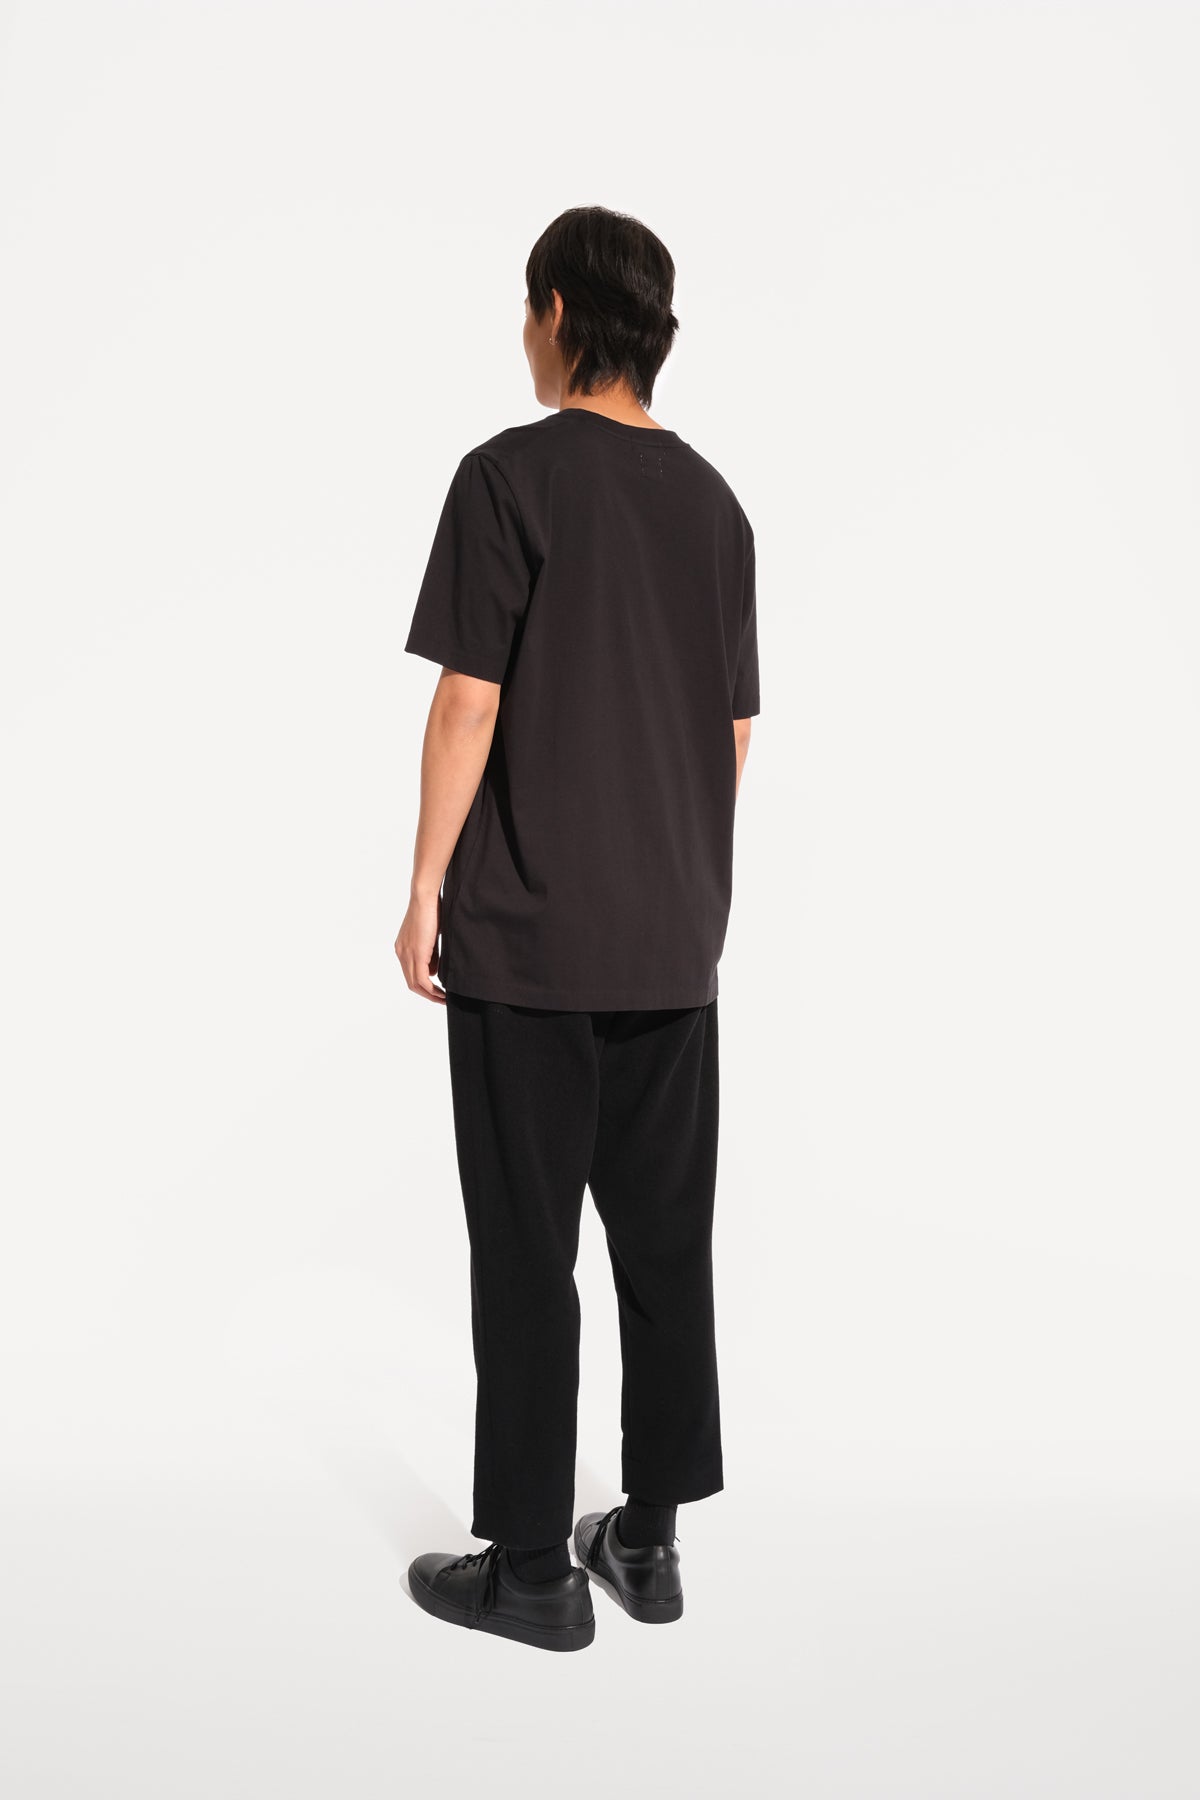 oftt - 01 - perfect fit t-shirt - black - organic cotton - image 4